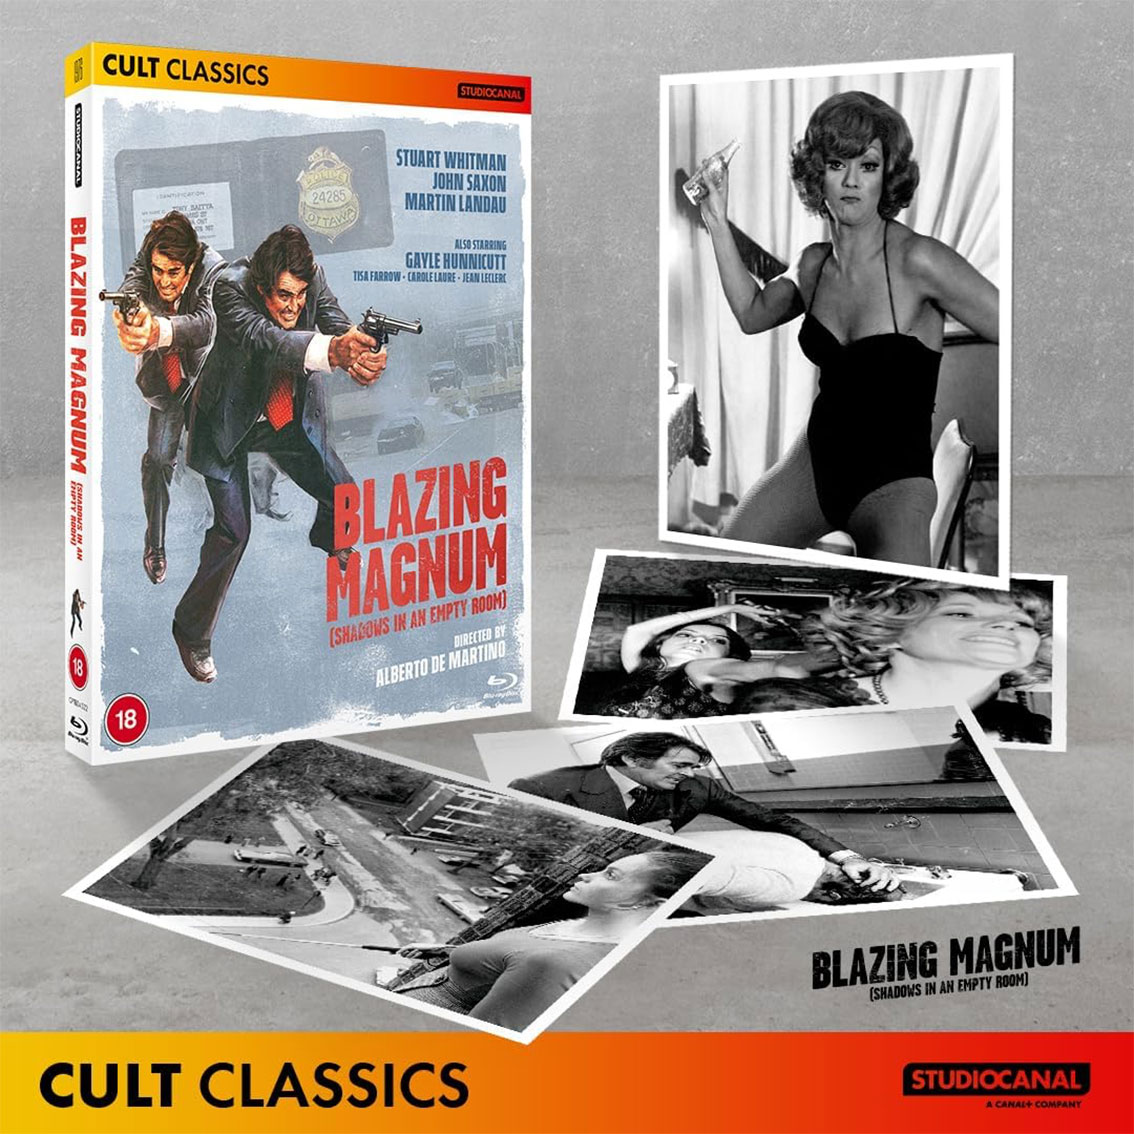 Blazing Magnum Blu-ray pack shot